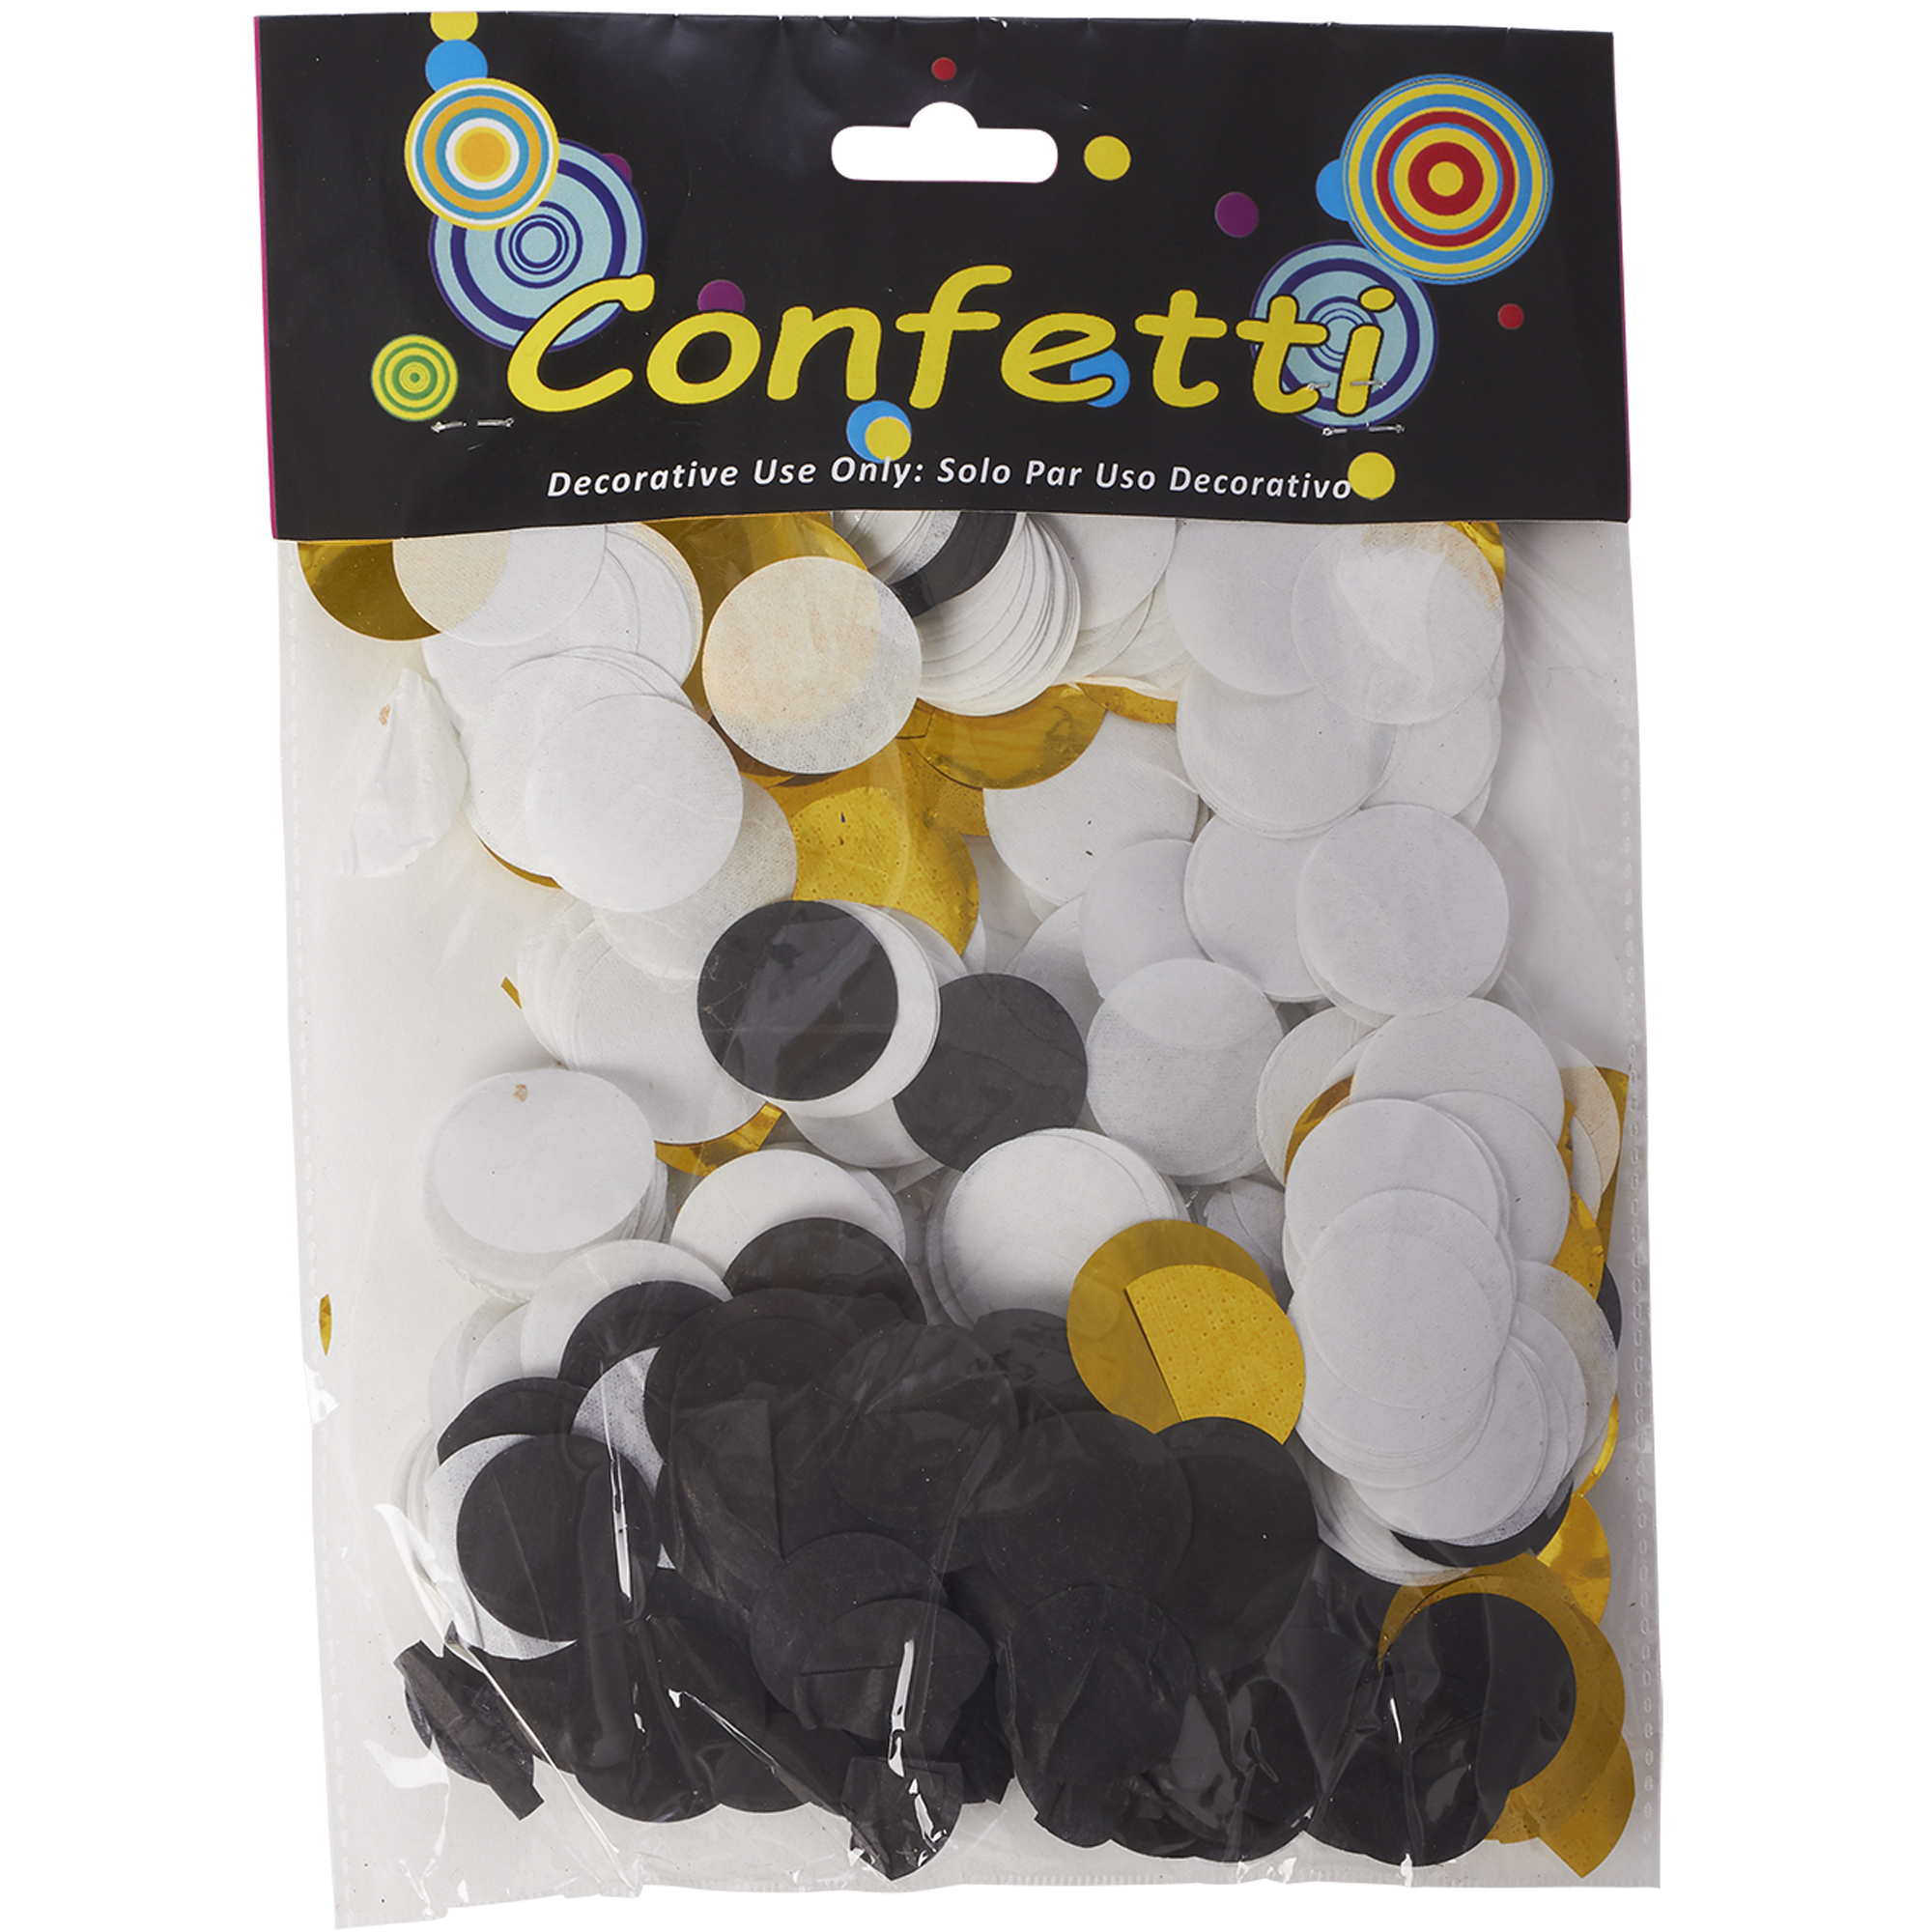 Mixed Confetti 1" 30g/bag - Gold